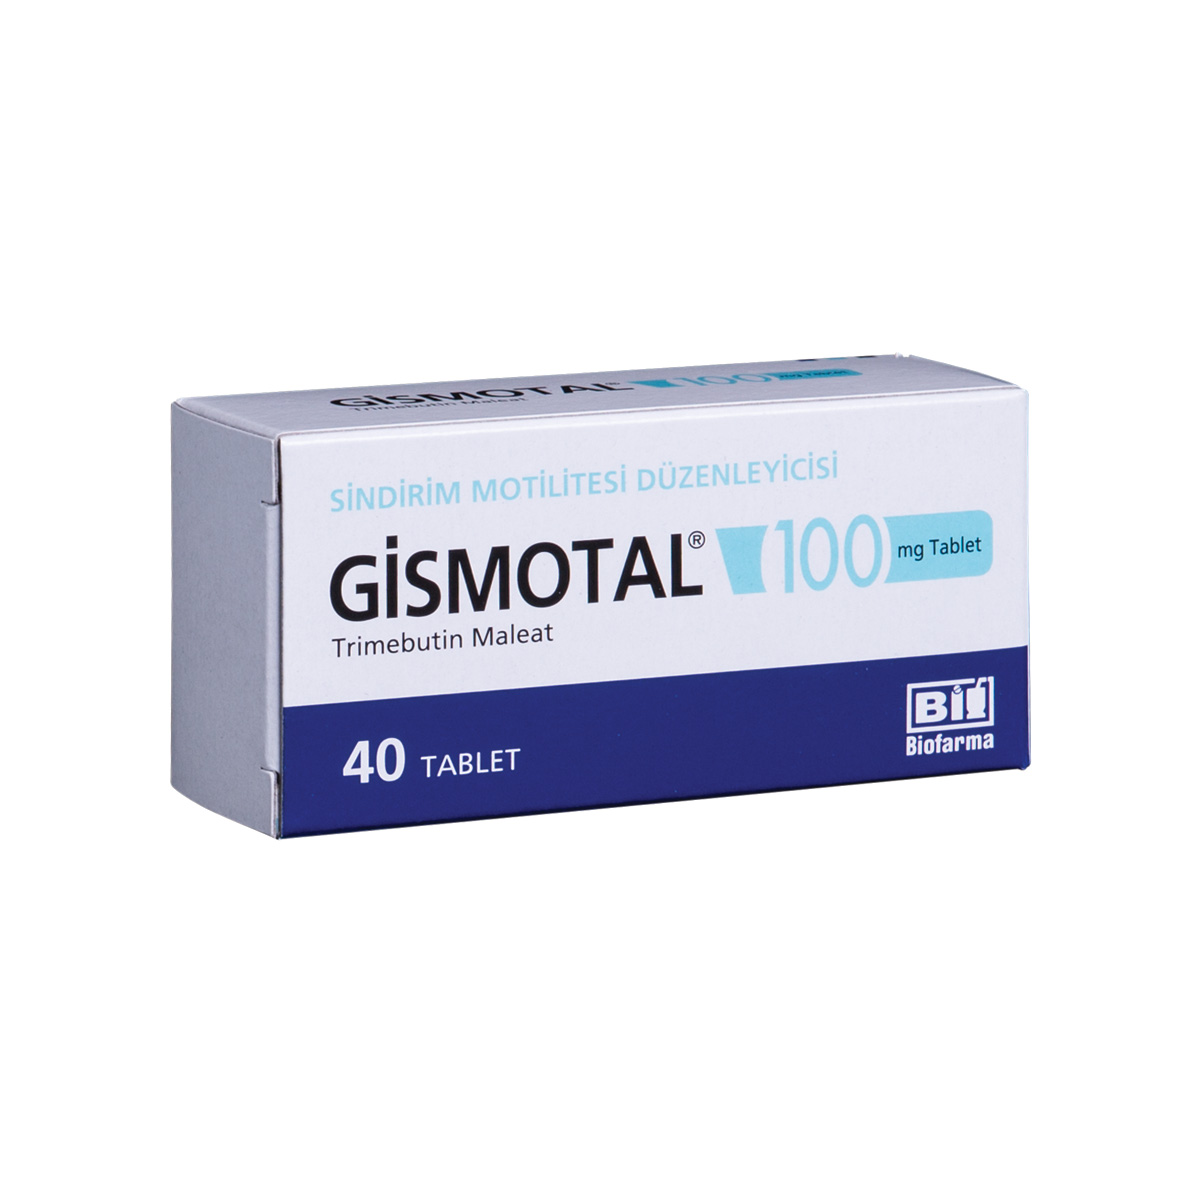 Gismotal - image 1